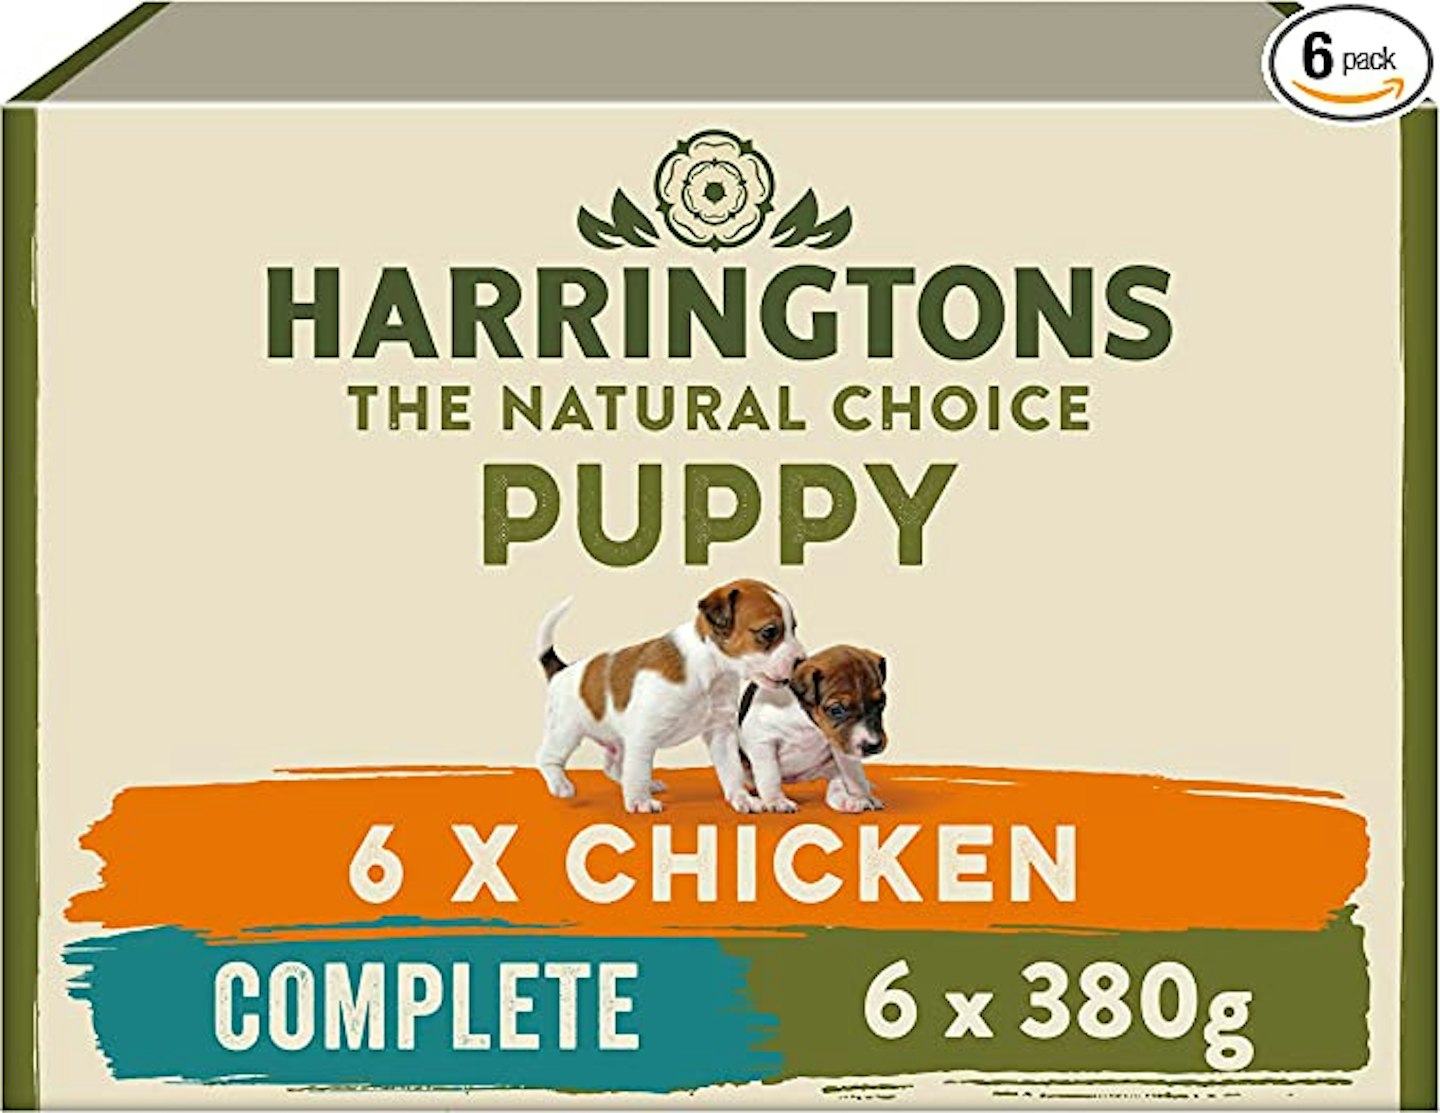 Harringtons Grain Free Wet Puppy Food, 6 x380g